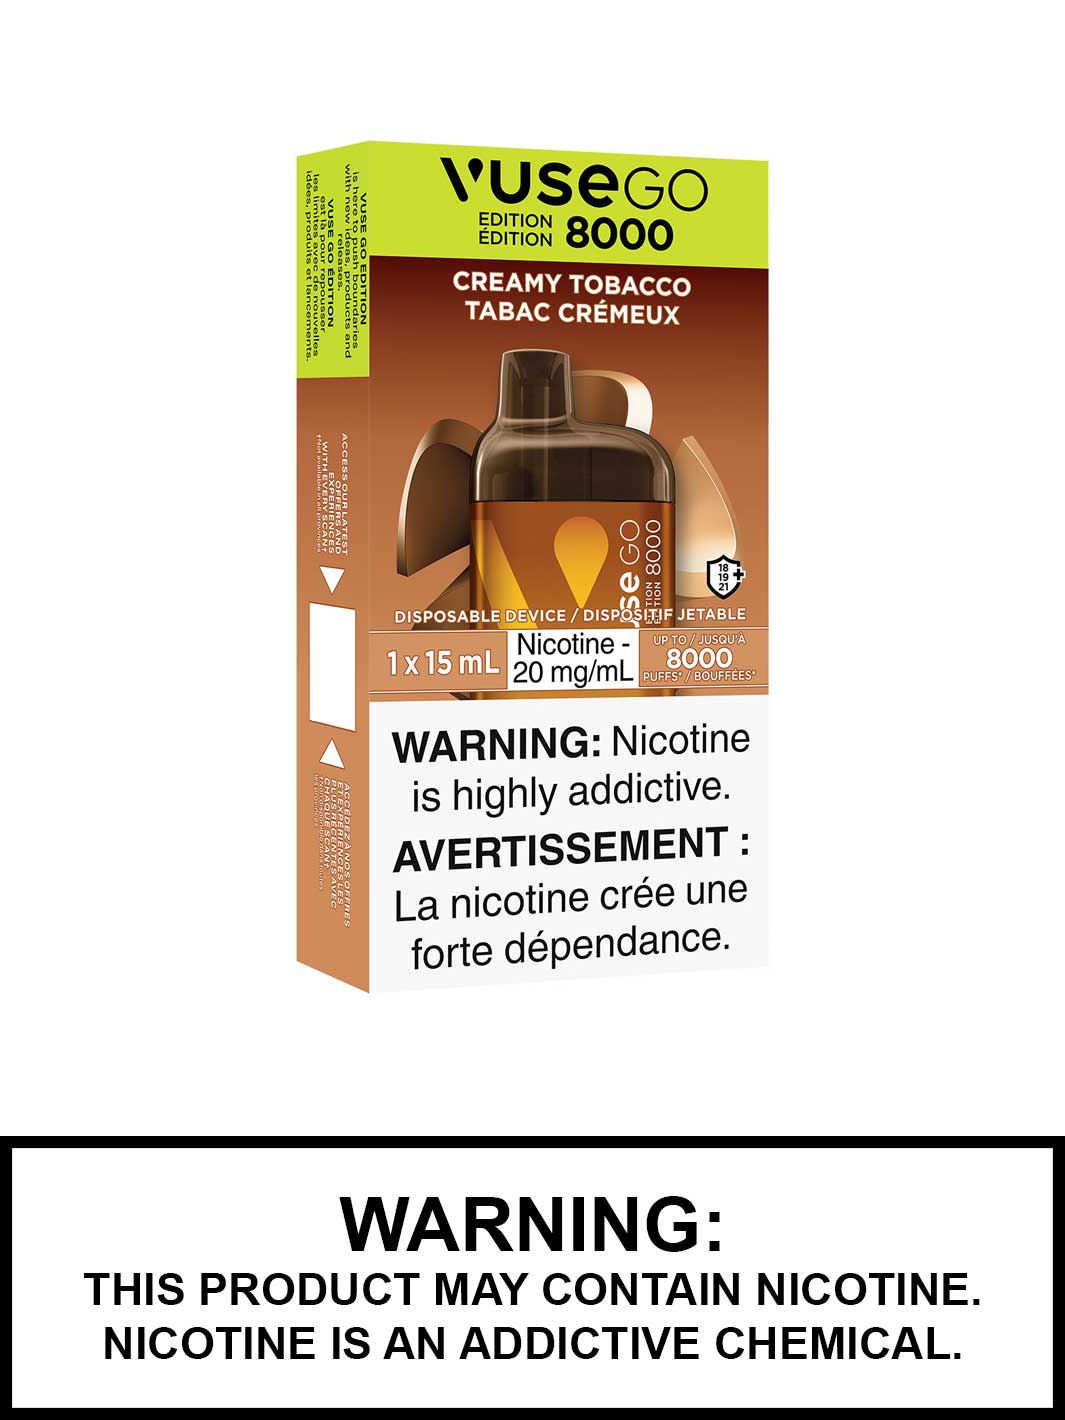 Creamy Tobacco Vuse Go 8000 Disposable Vape, Vuse Vape Canada, Vape360